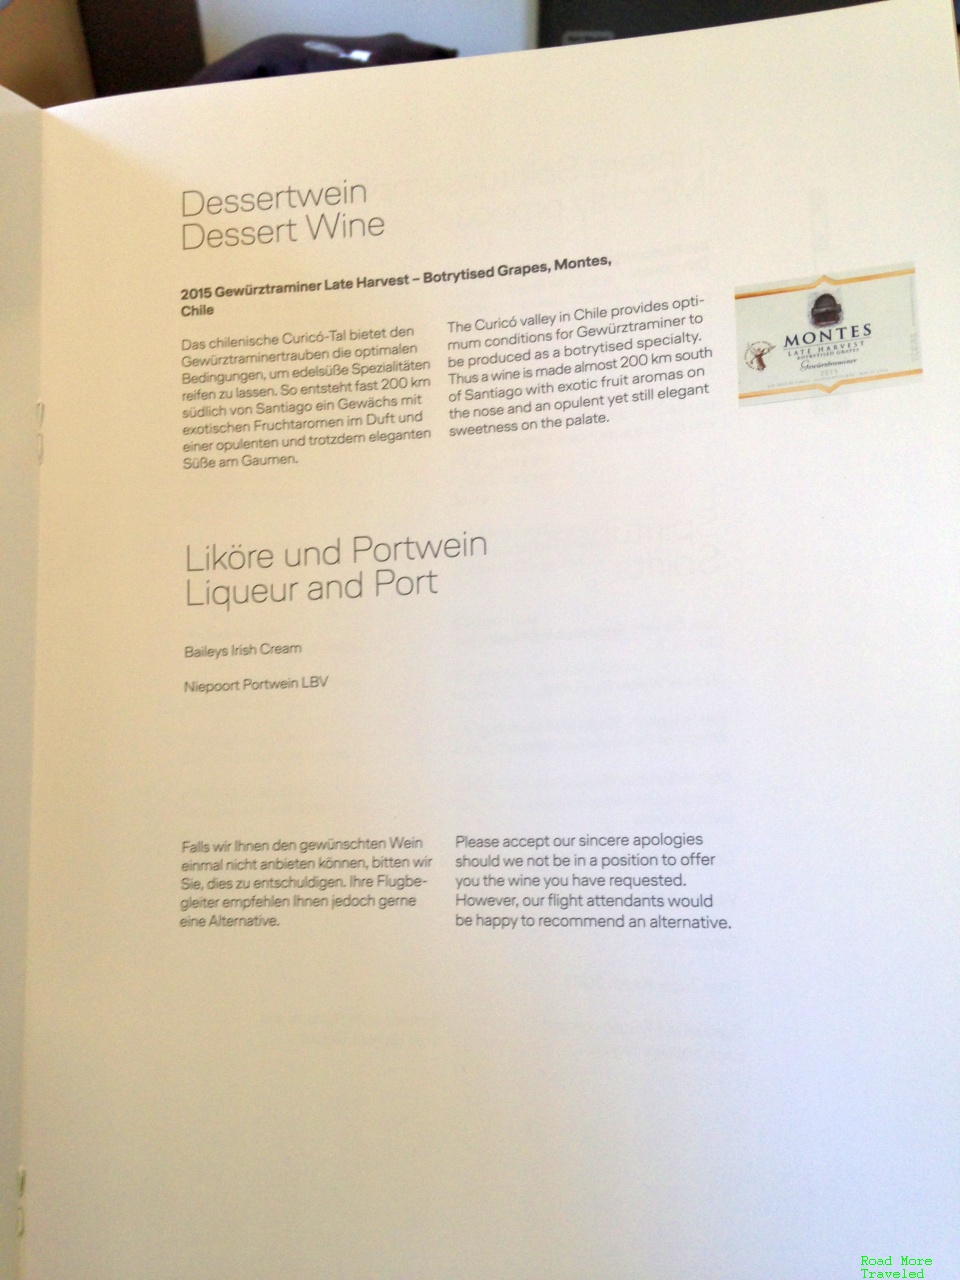 Desert wine and port